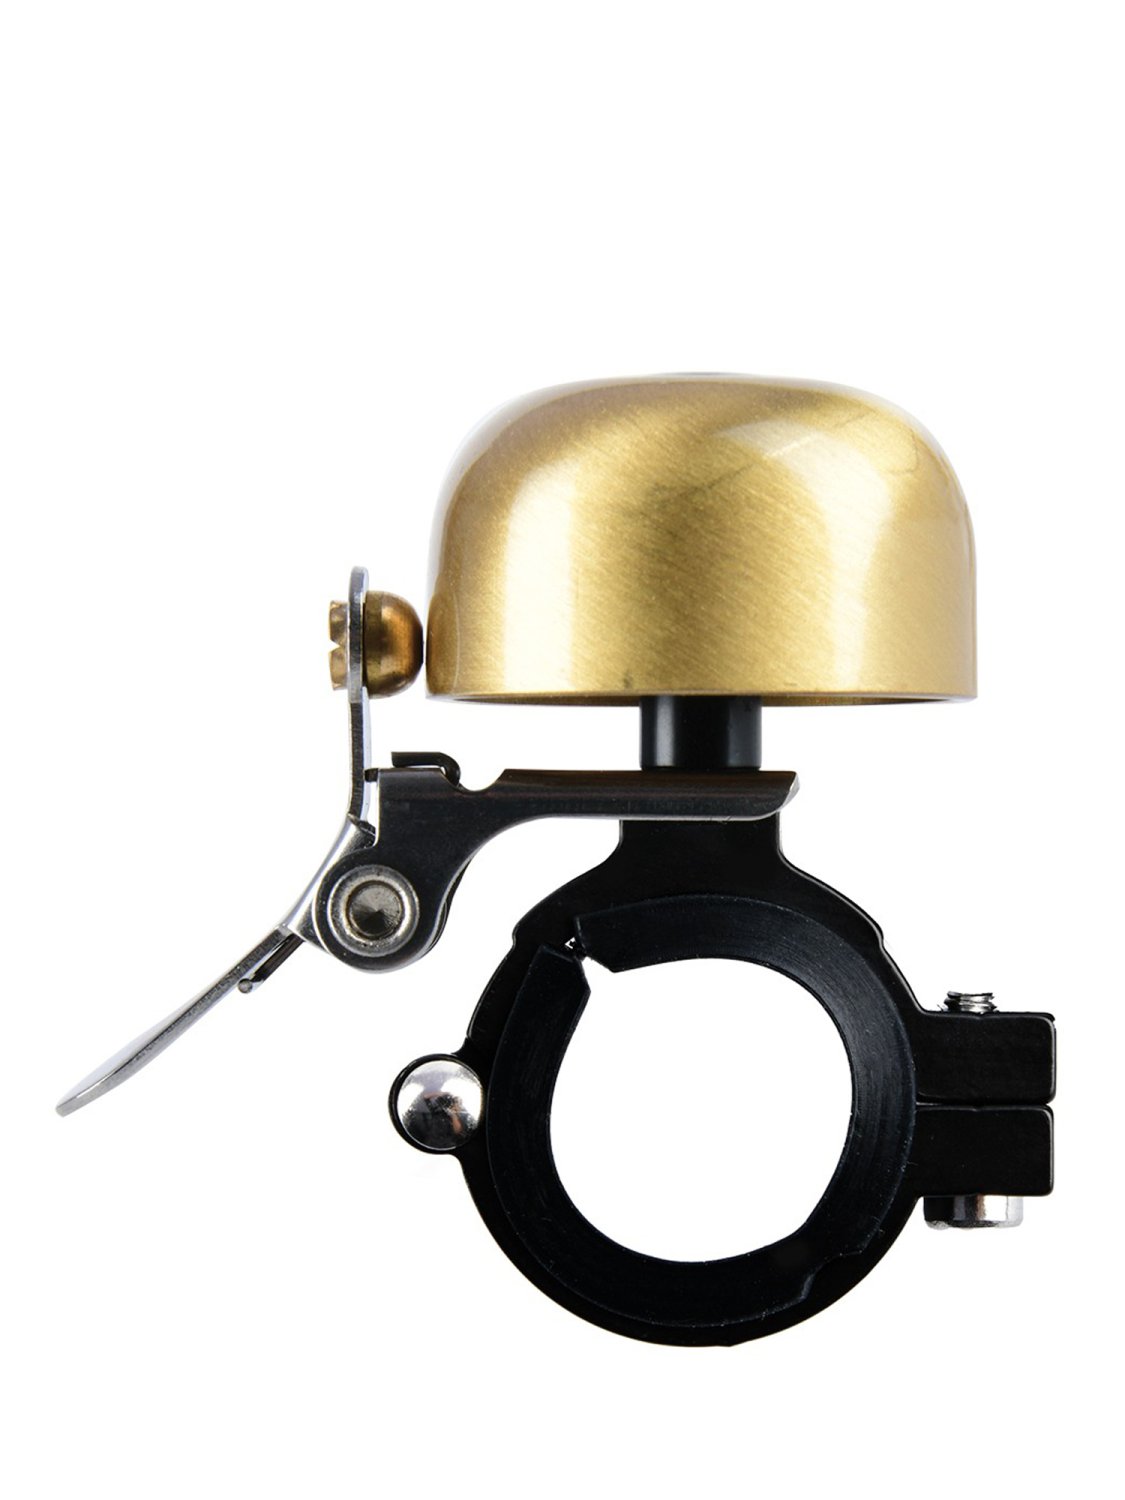 Звонок велосипедный Oxford Mini Ping Brass Bell Gold б/р, BE157G звонок механический forward l d 104